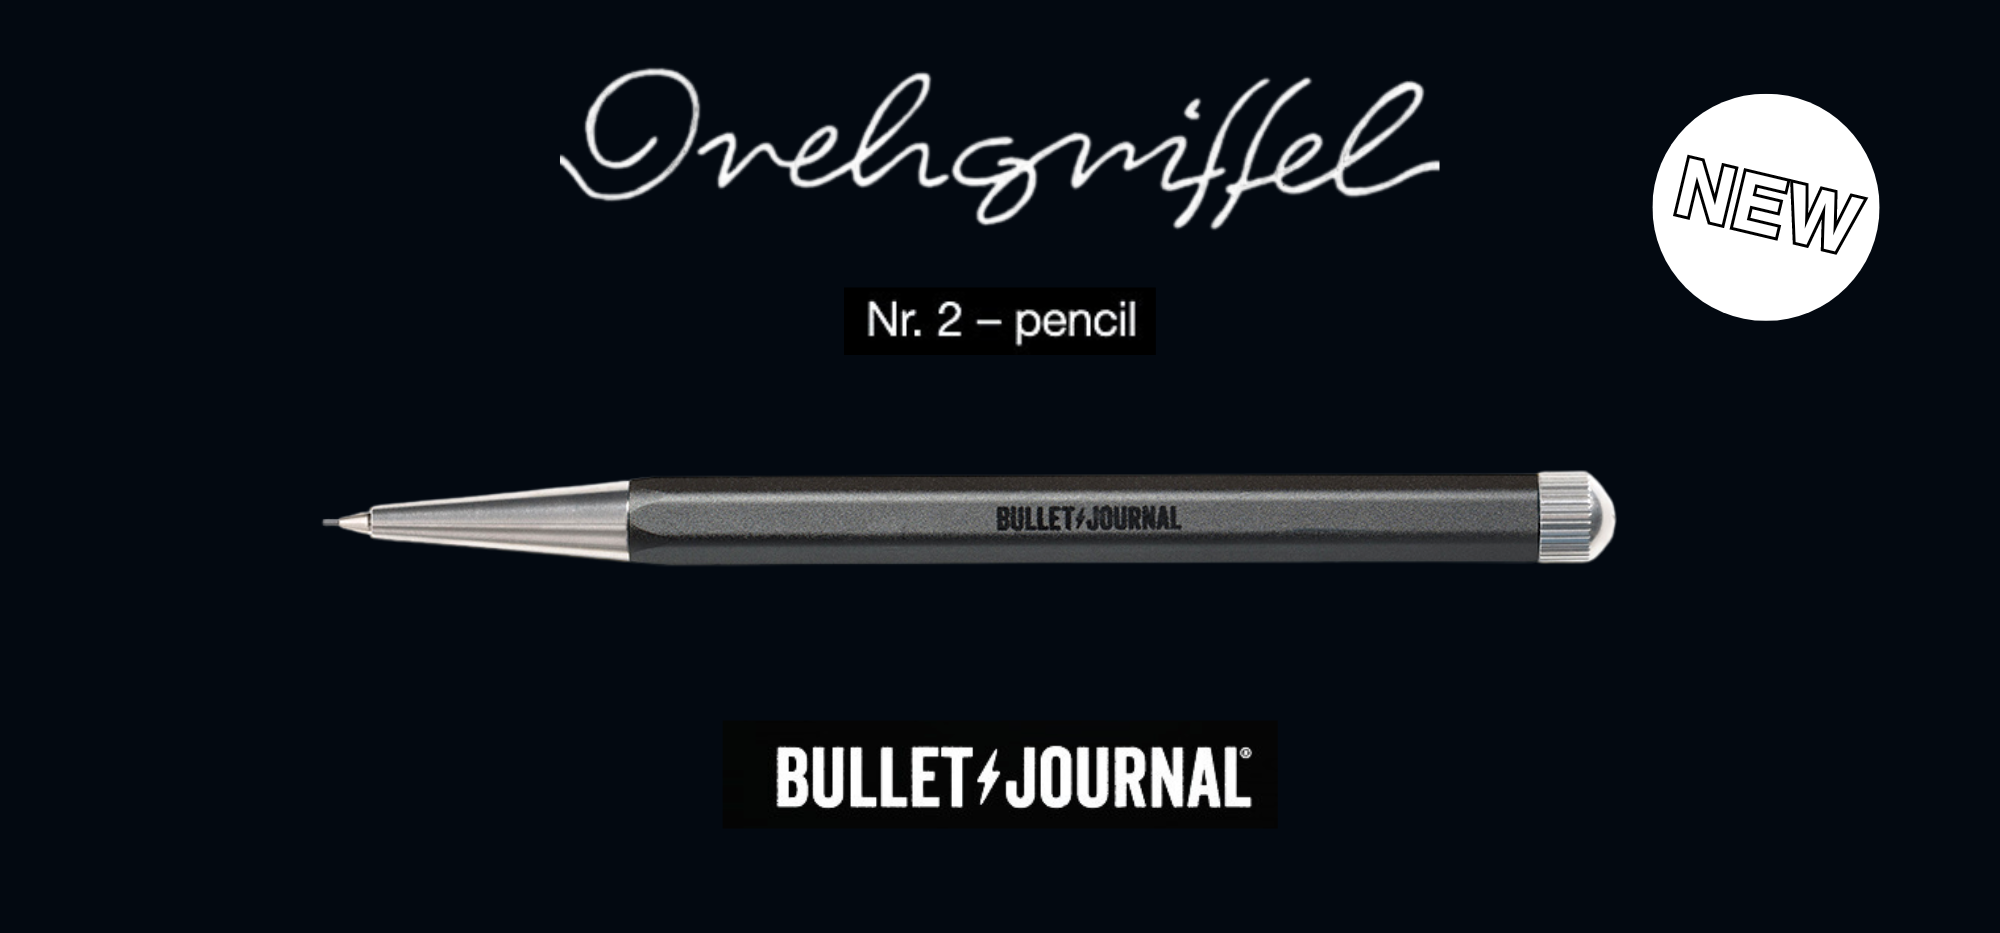 Bullet journal - Wikipedia